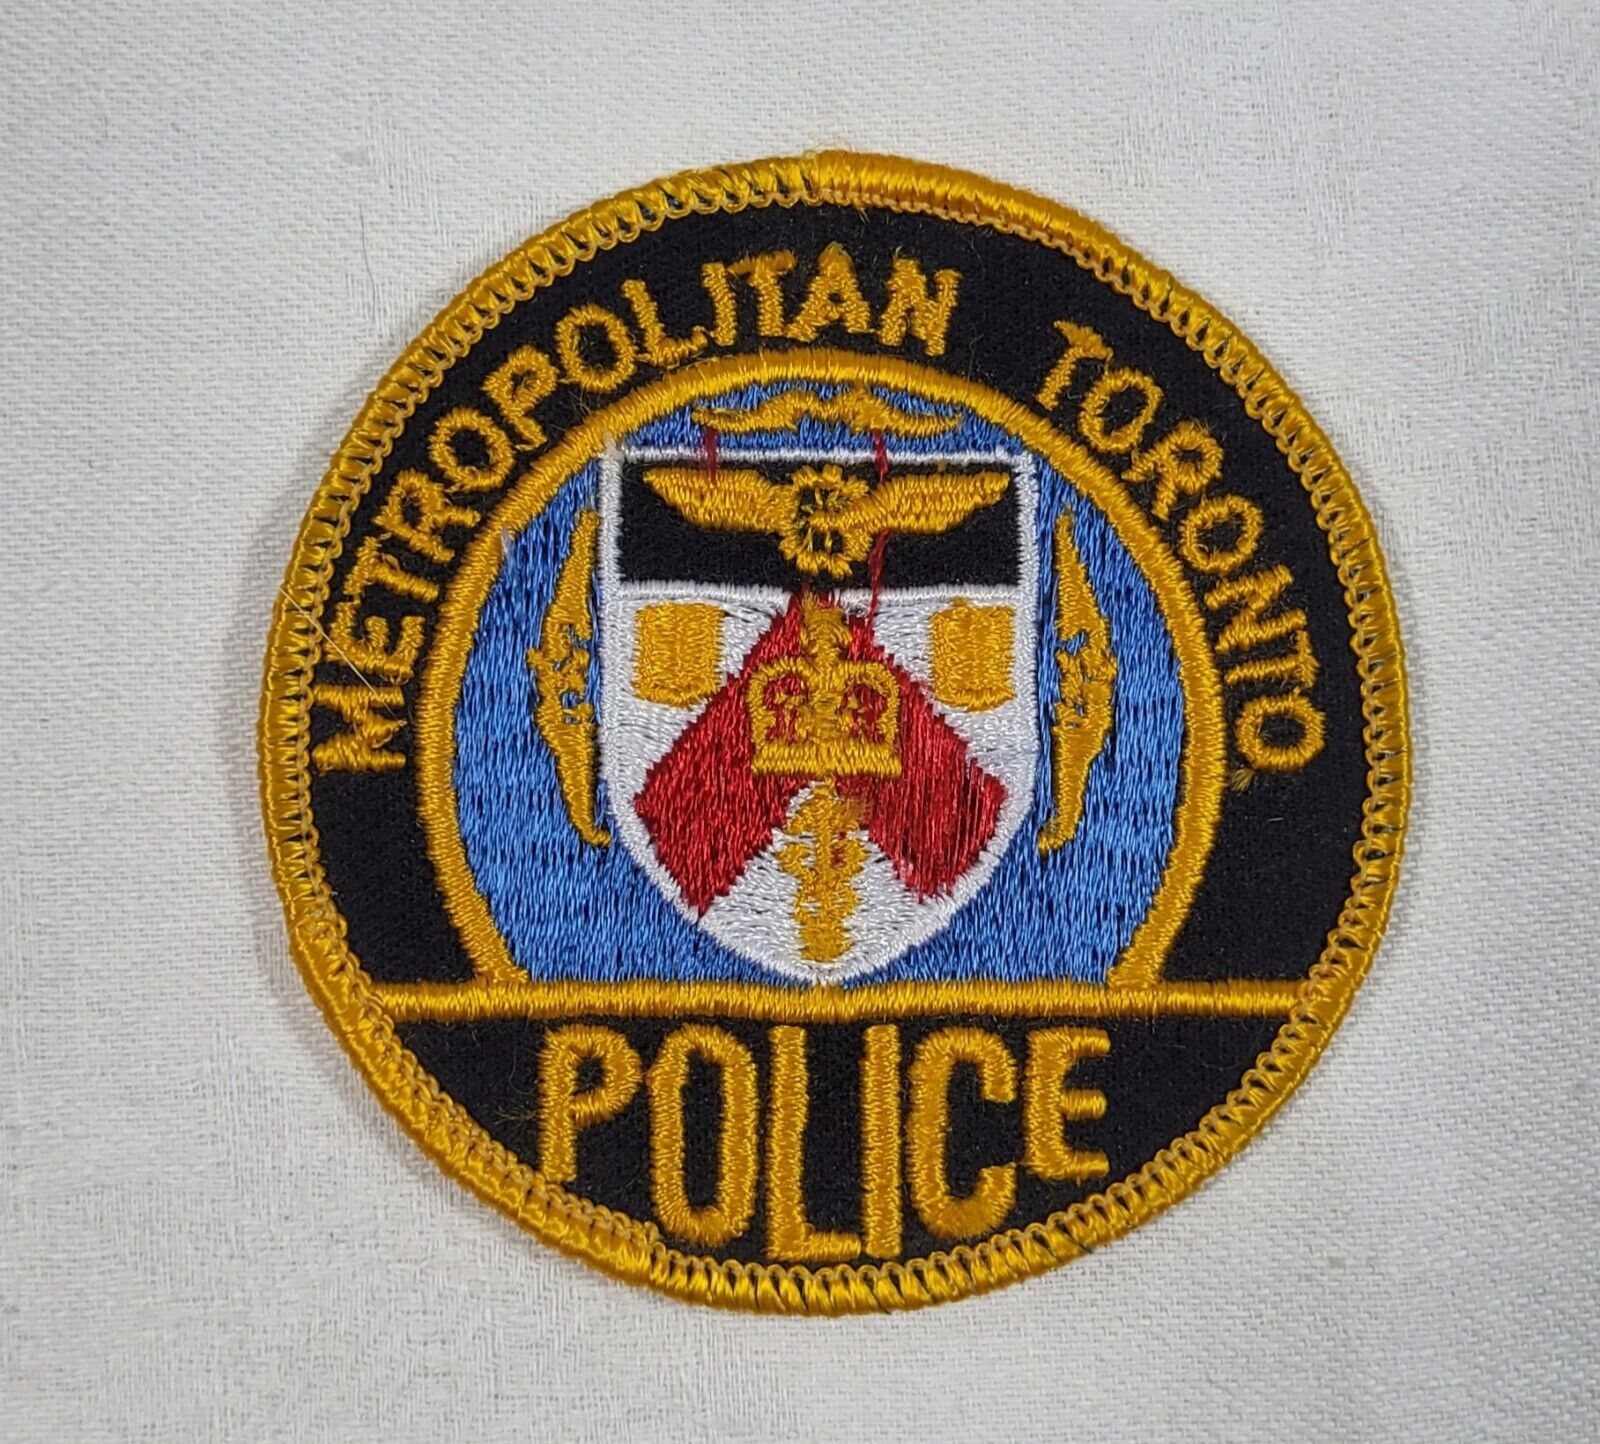 METROPOLITAN TORONTO CANADA POLICE SHOULDER PATCH - OLD YELLOW VERSION